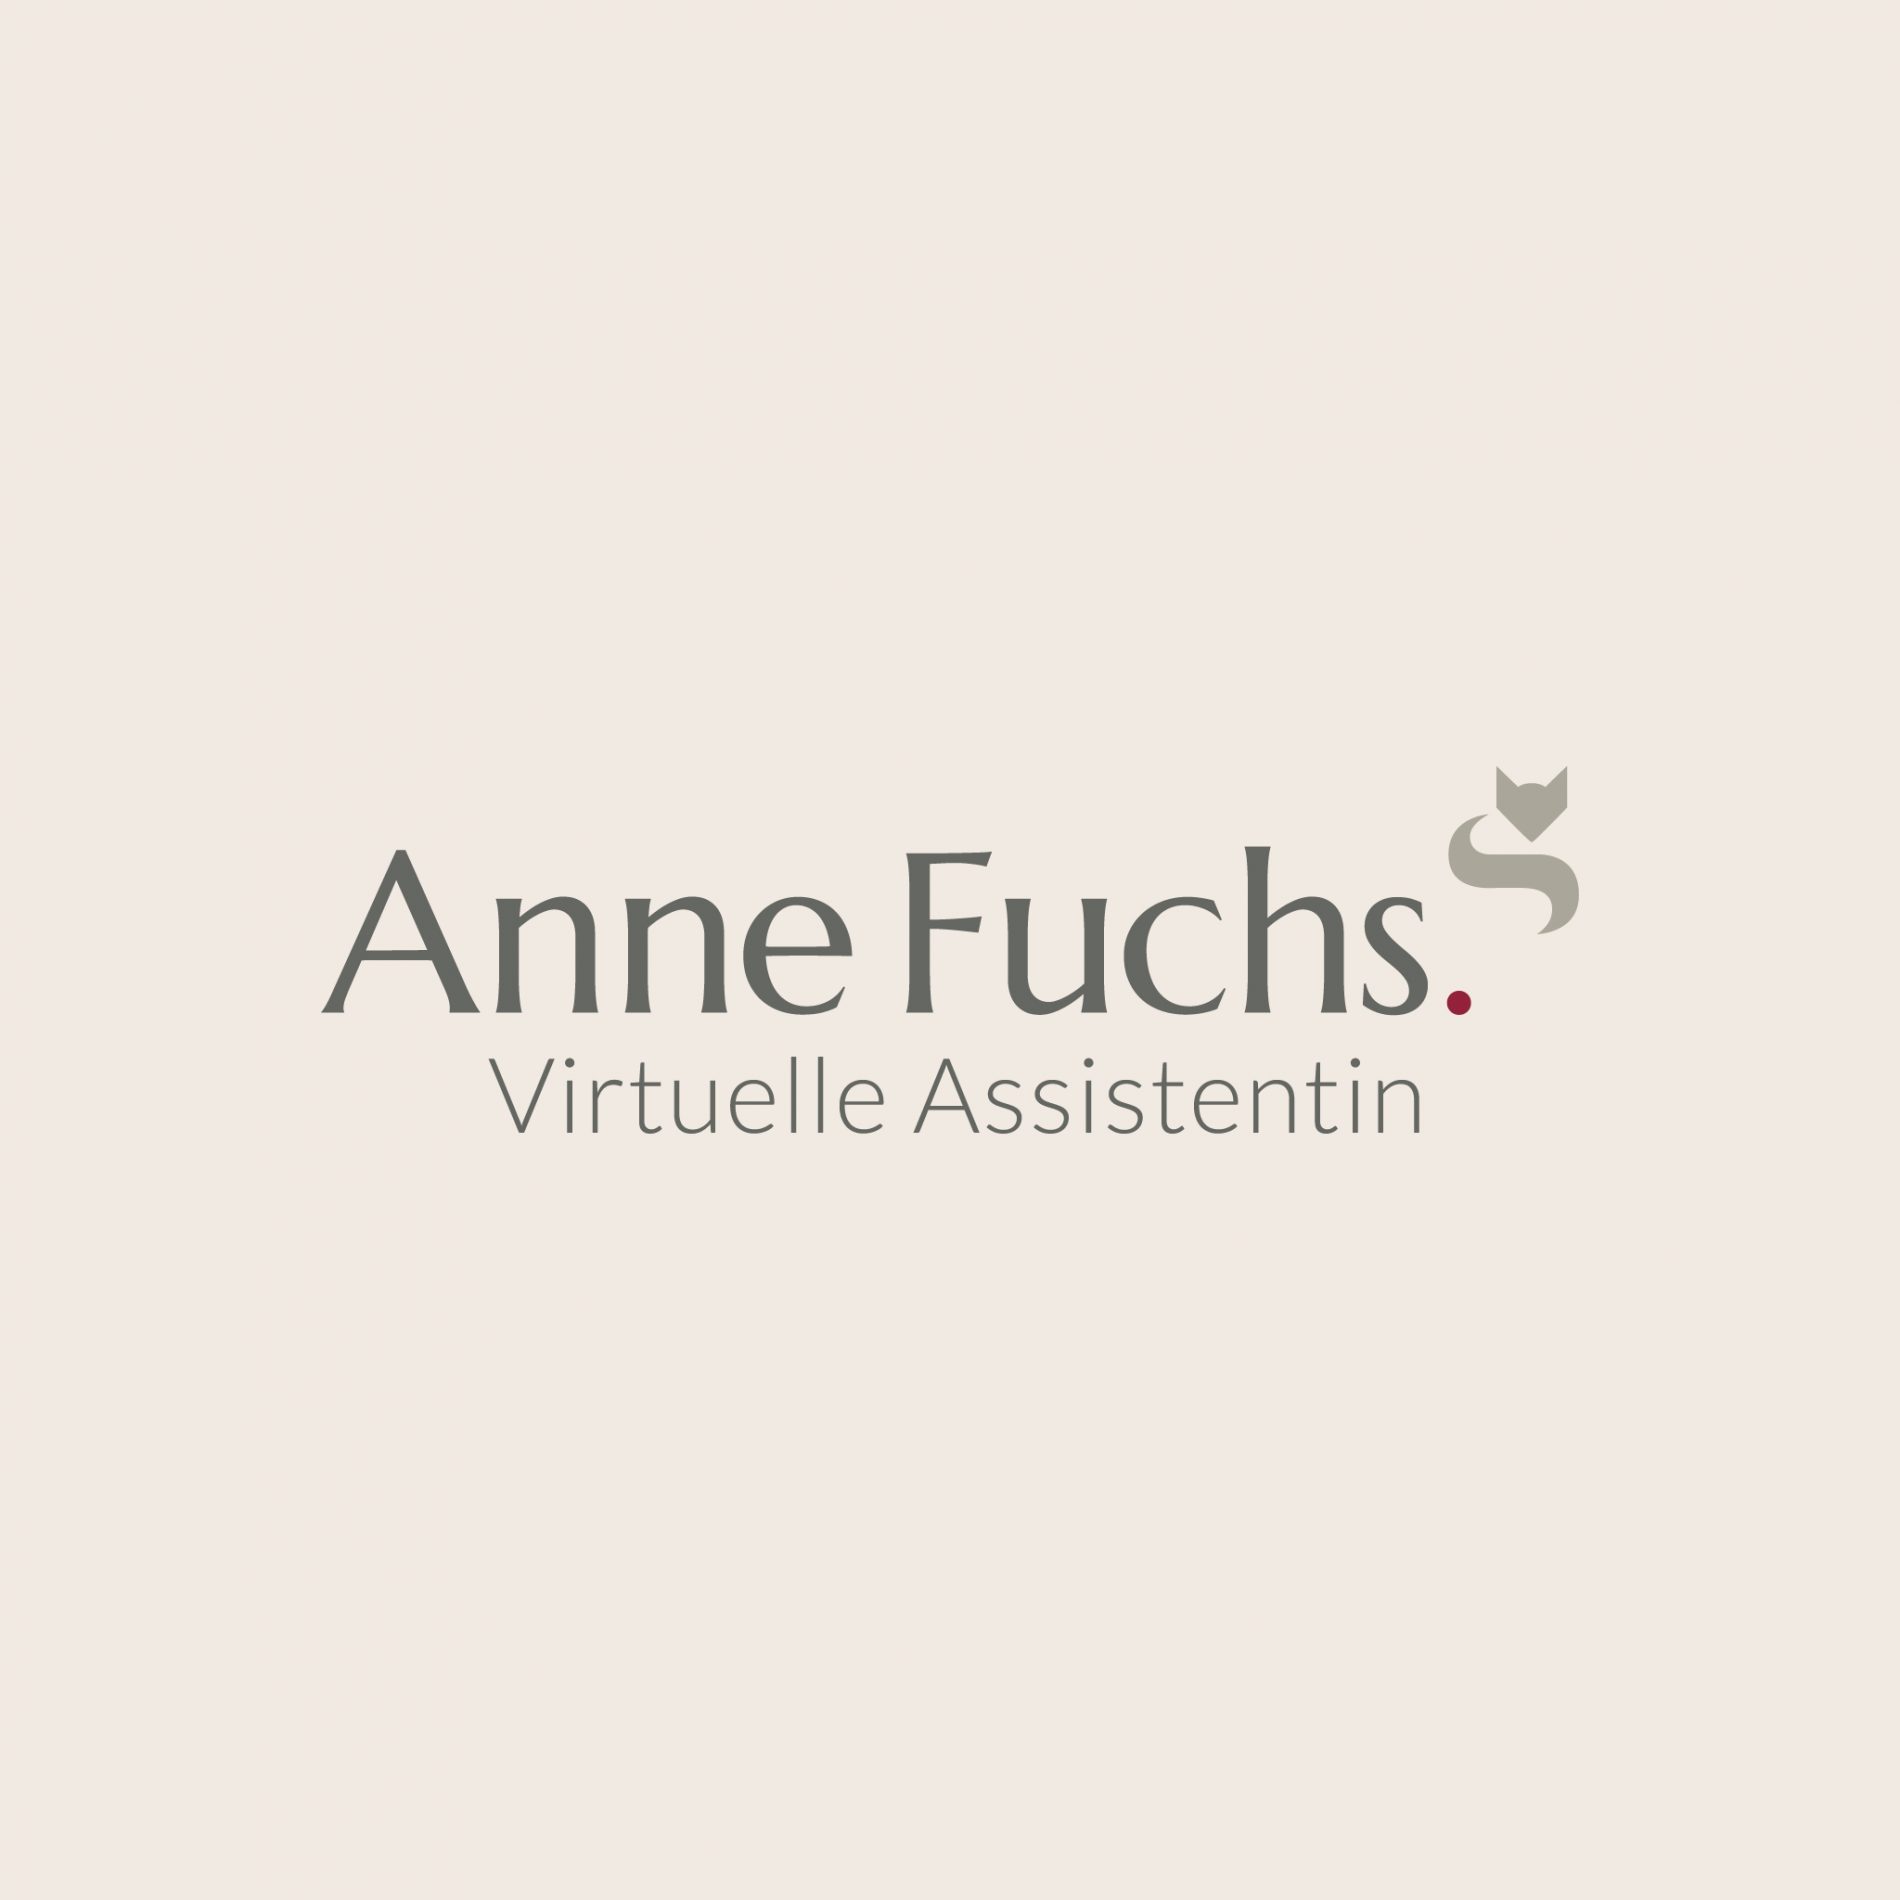 logo virtuelle assistentin